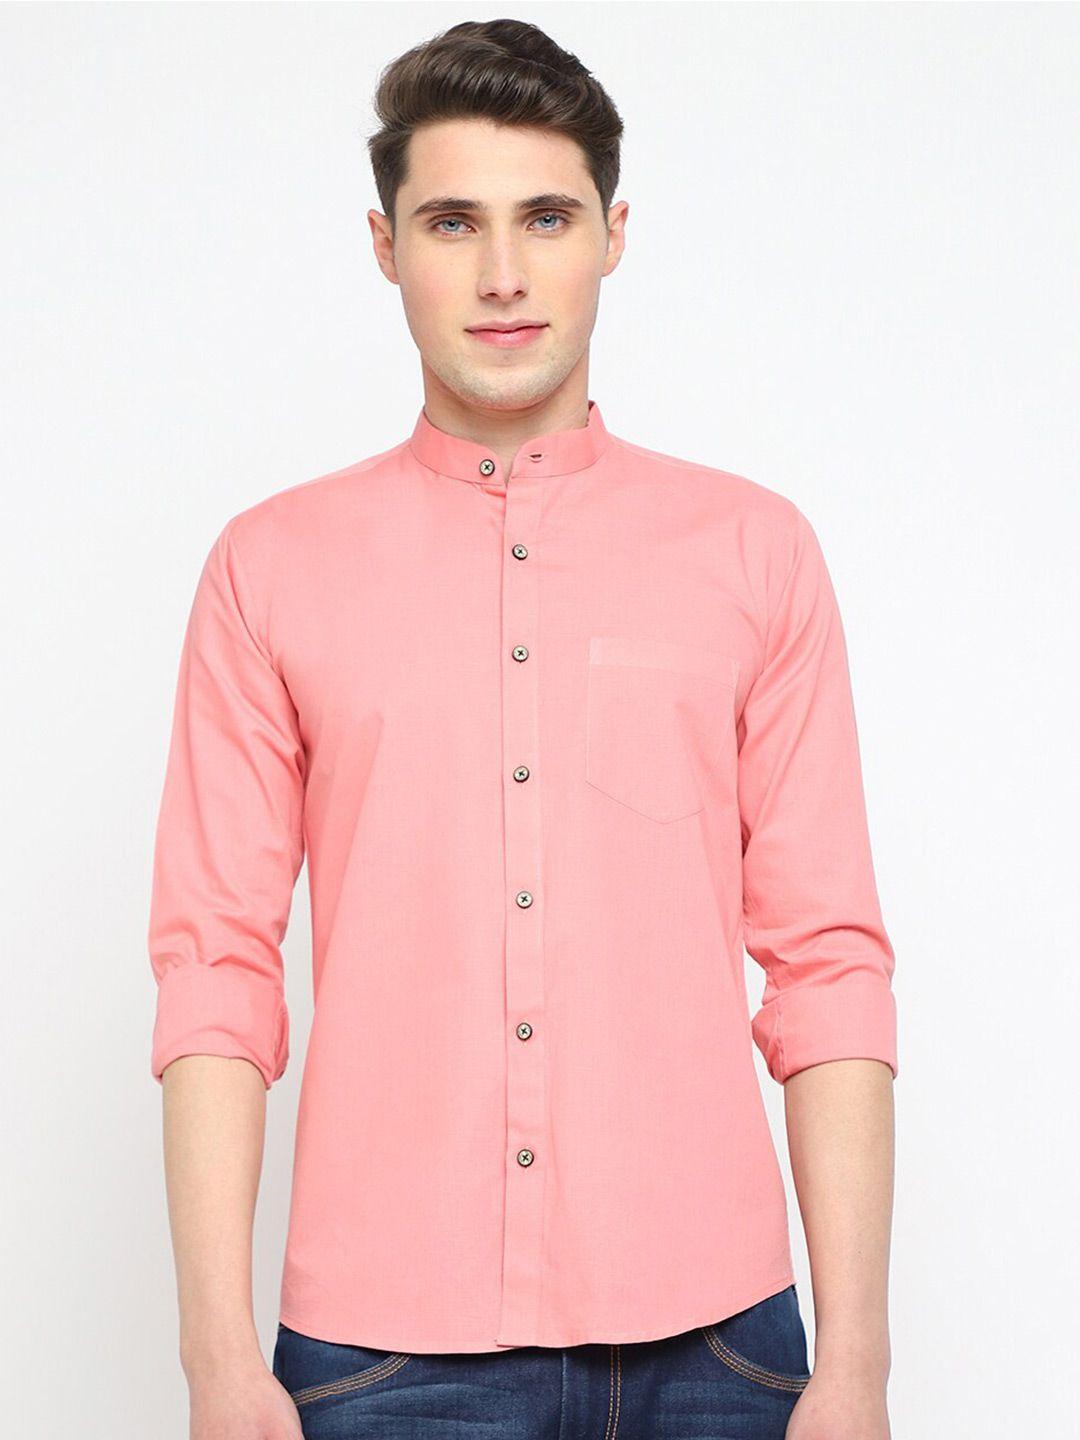 jadeberry-classic-slim-fit-mandarin-collar-cotton-casual-shirt